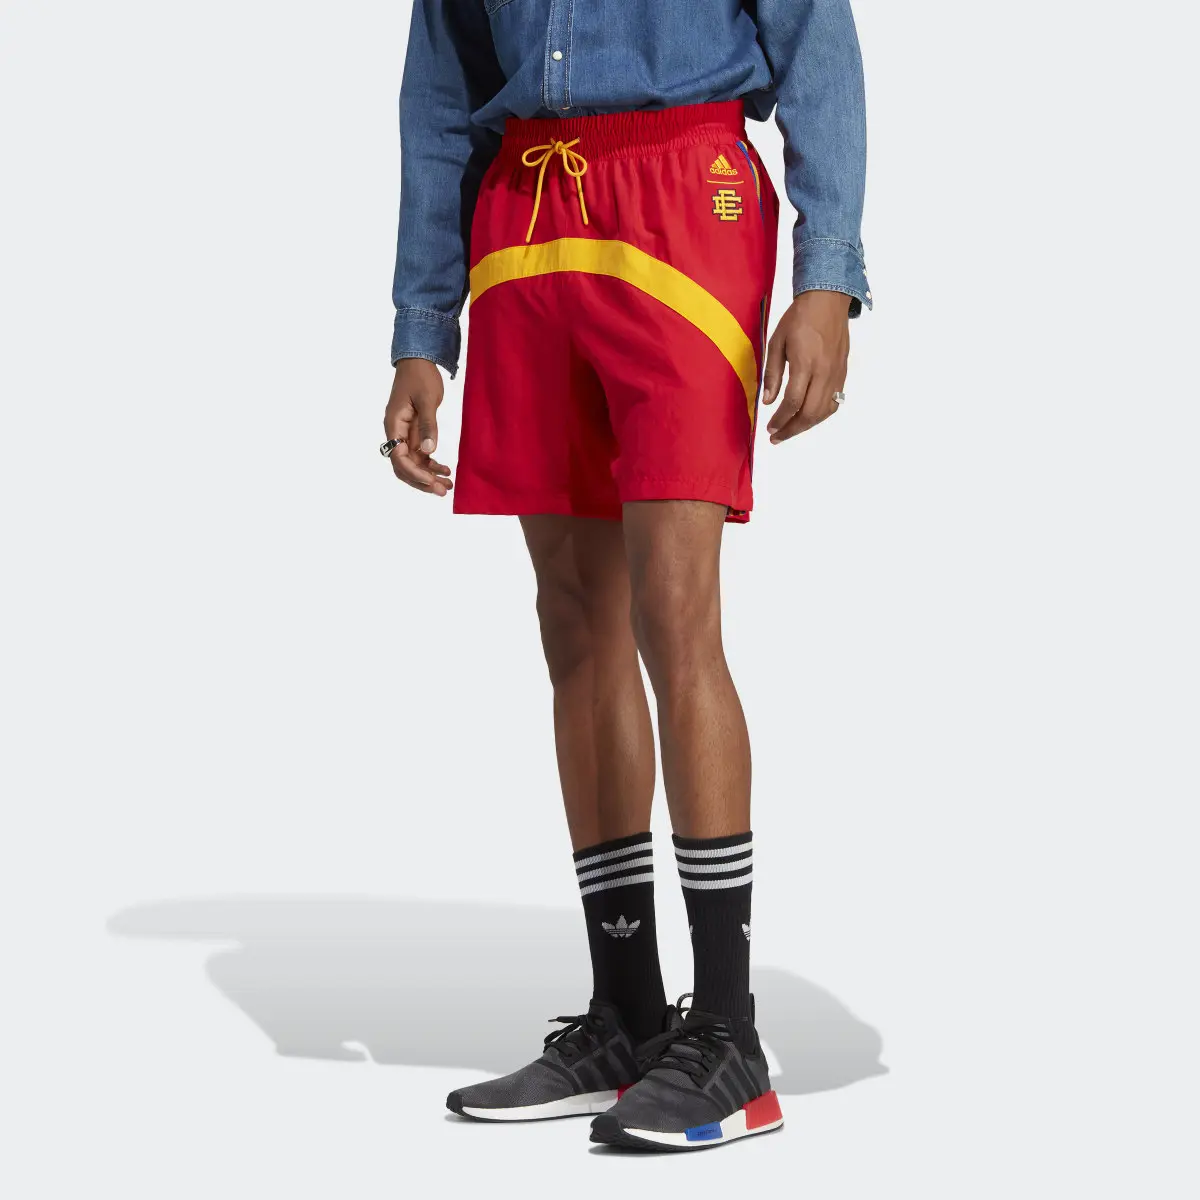 Adidas Shorts Eric Emanuel McDonald's. 1